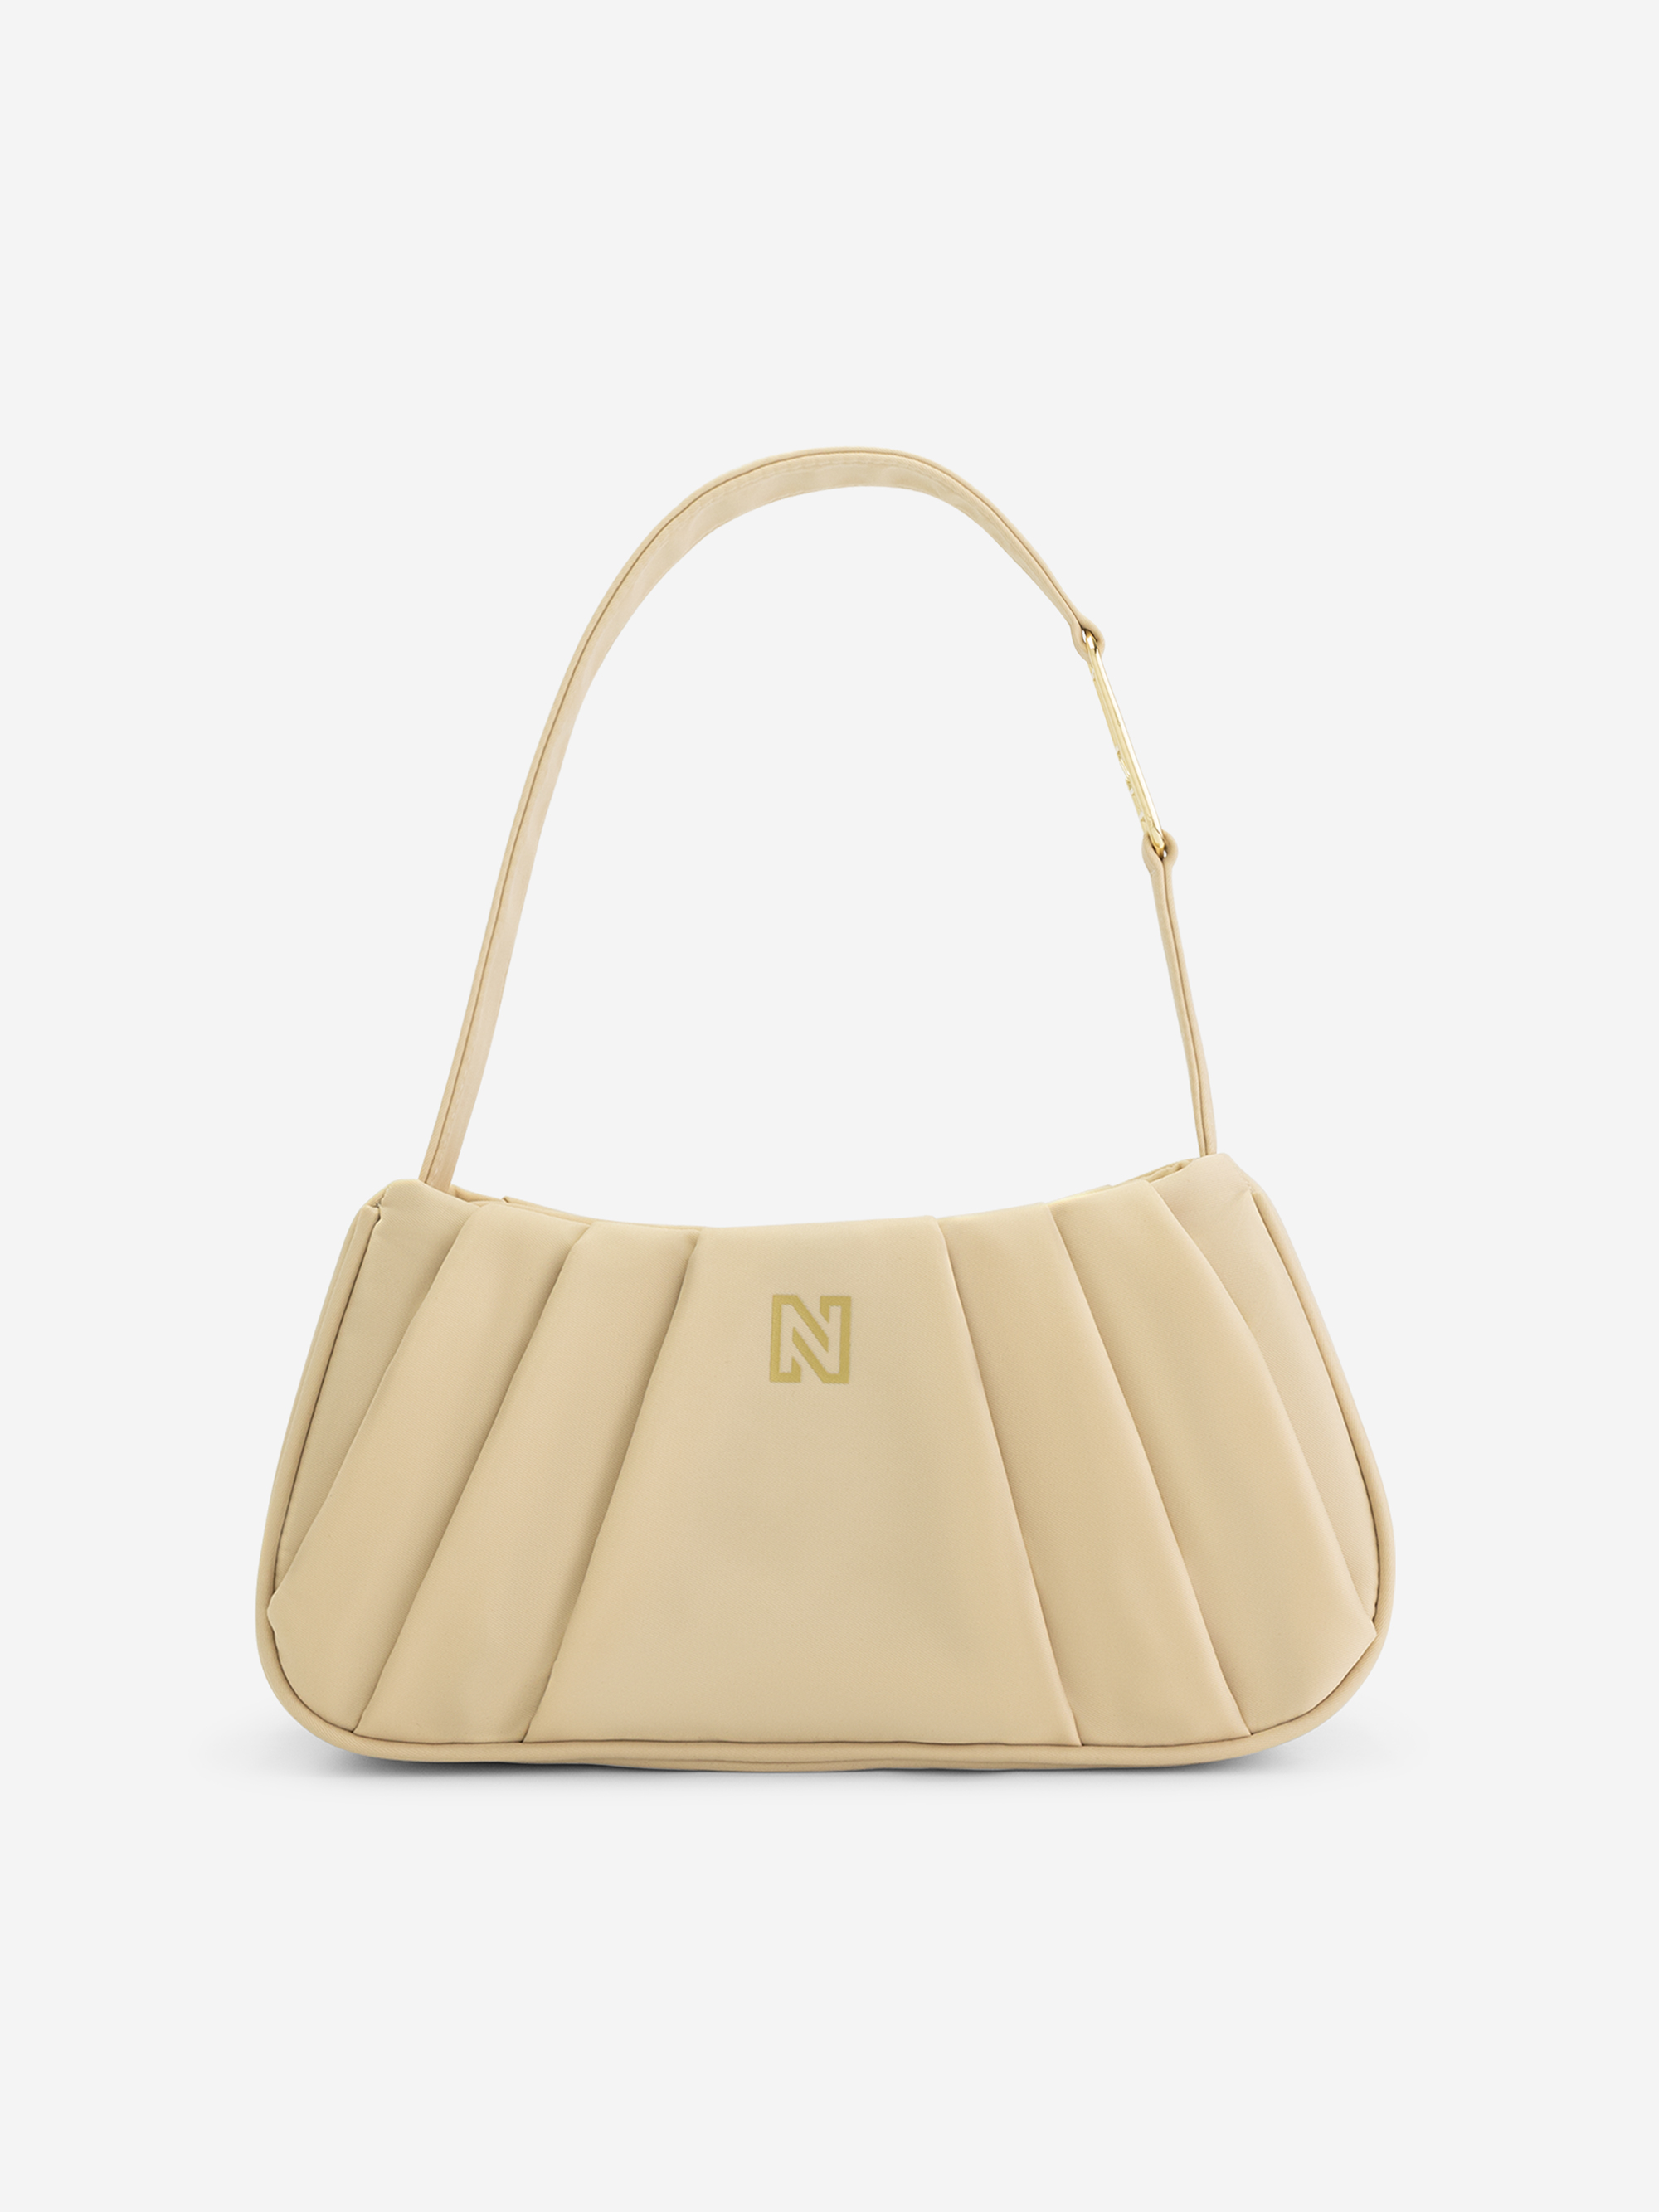 Shoulderbag with N logo plate 